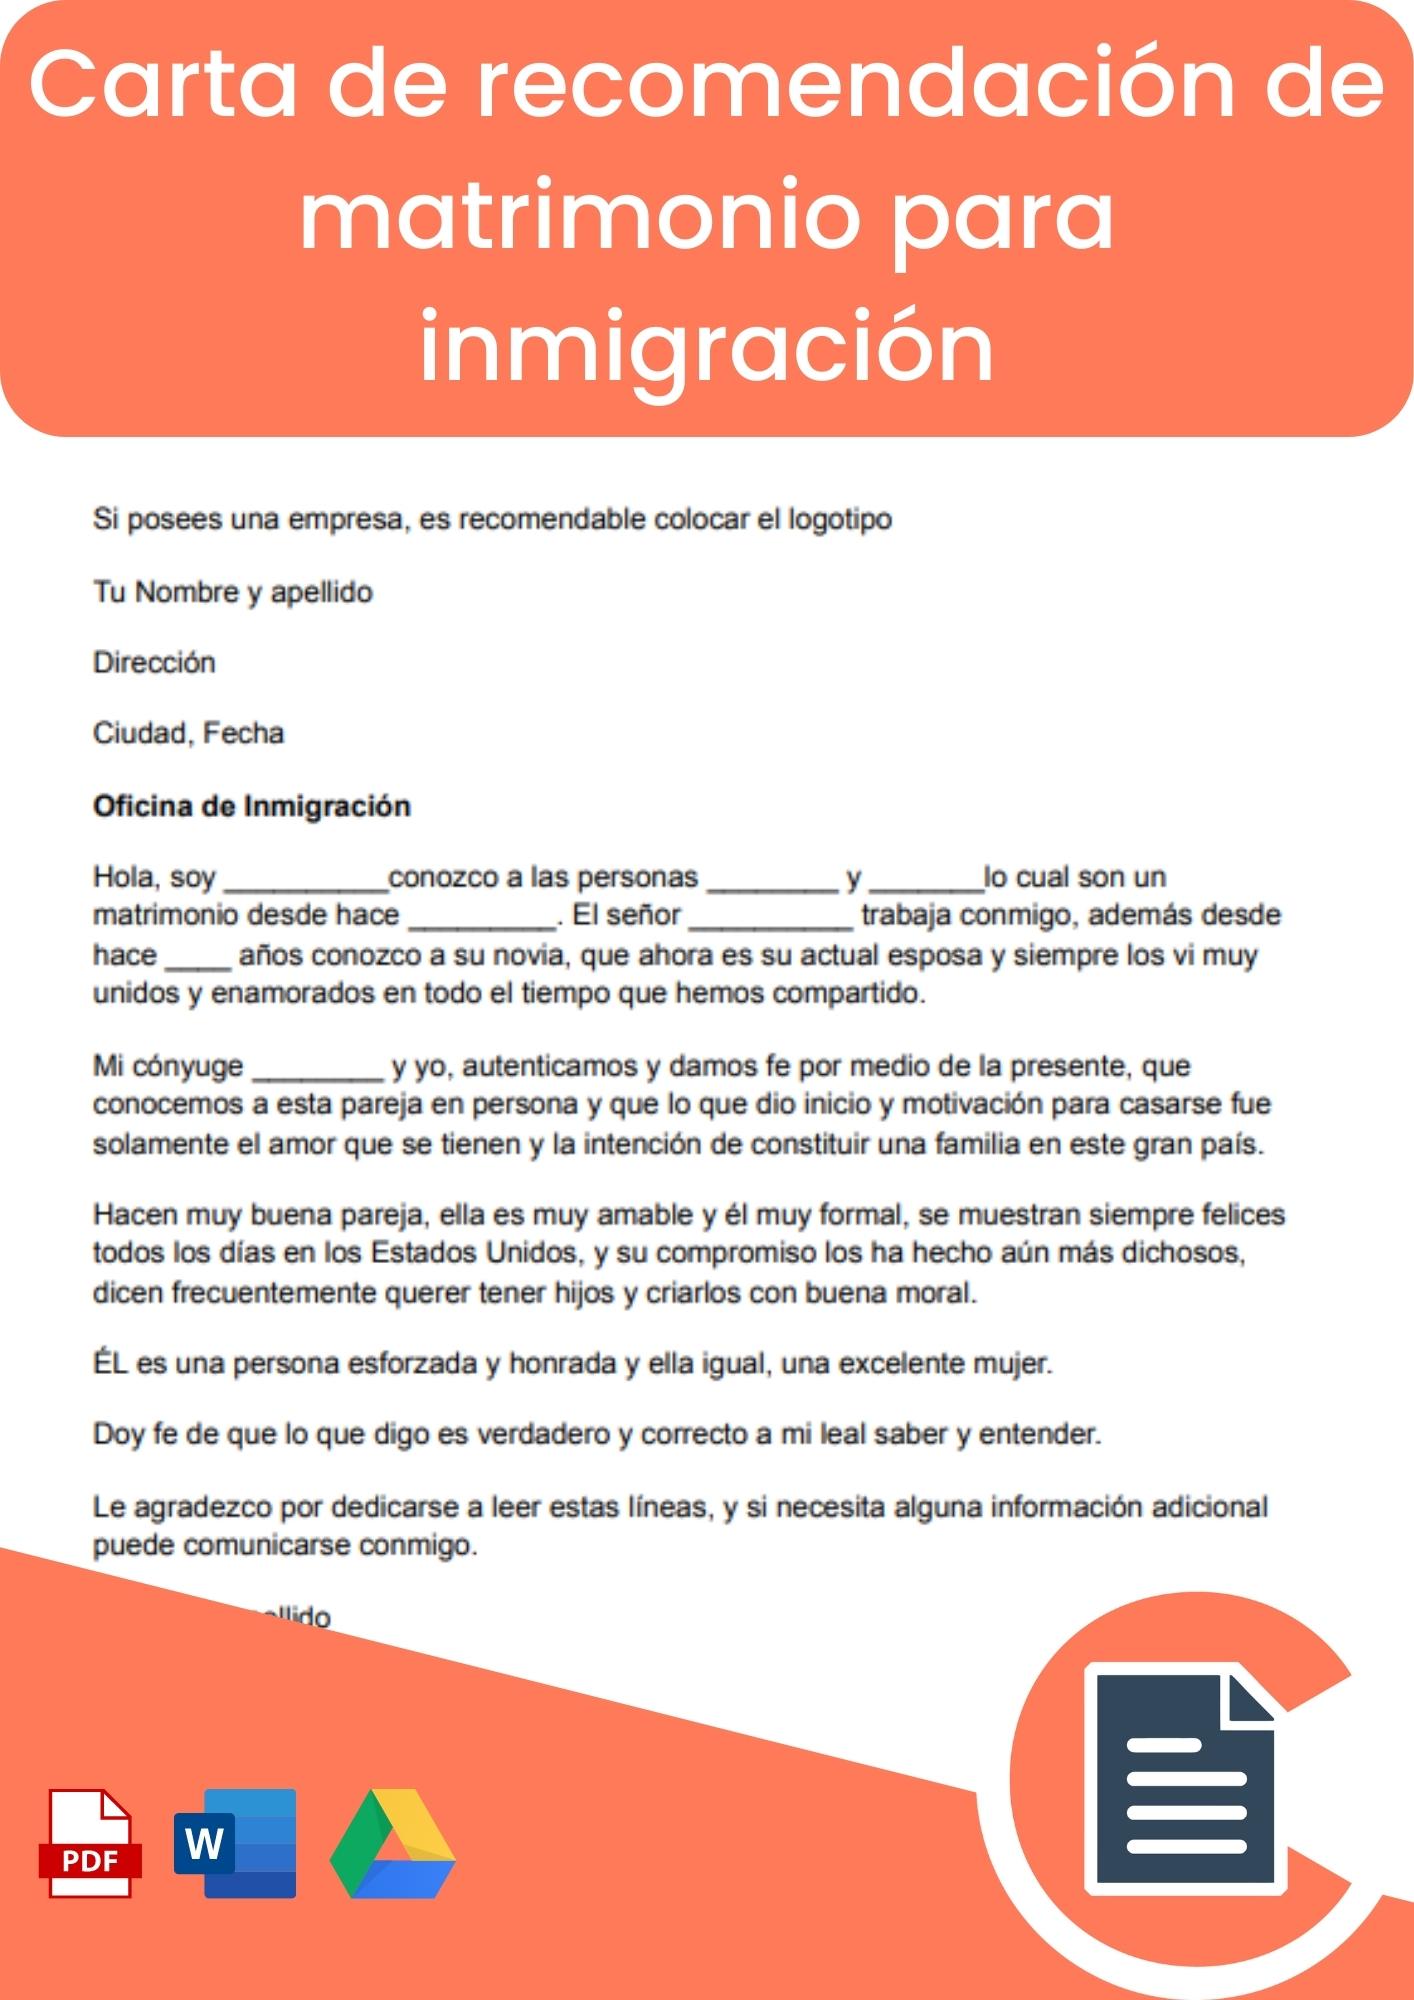 Carta de recomendación de matrimonio para inmigración